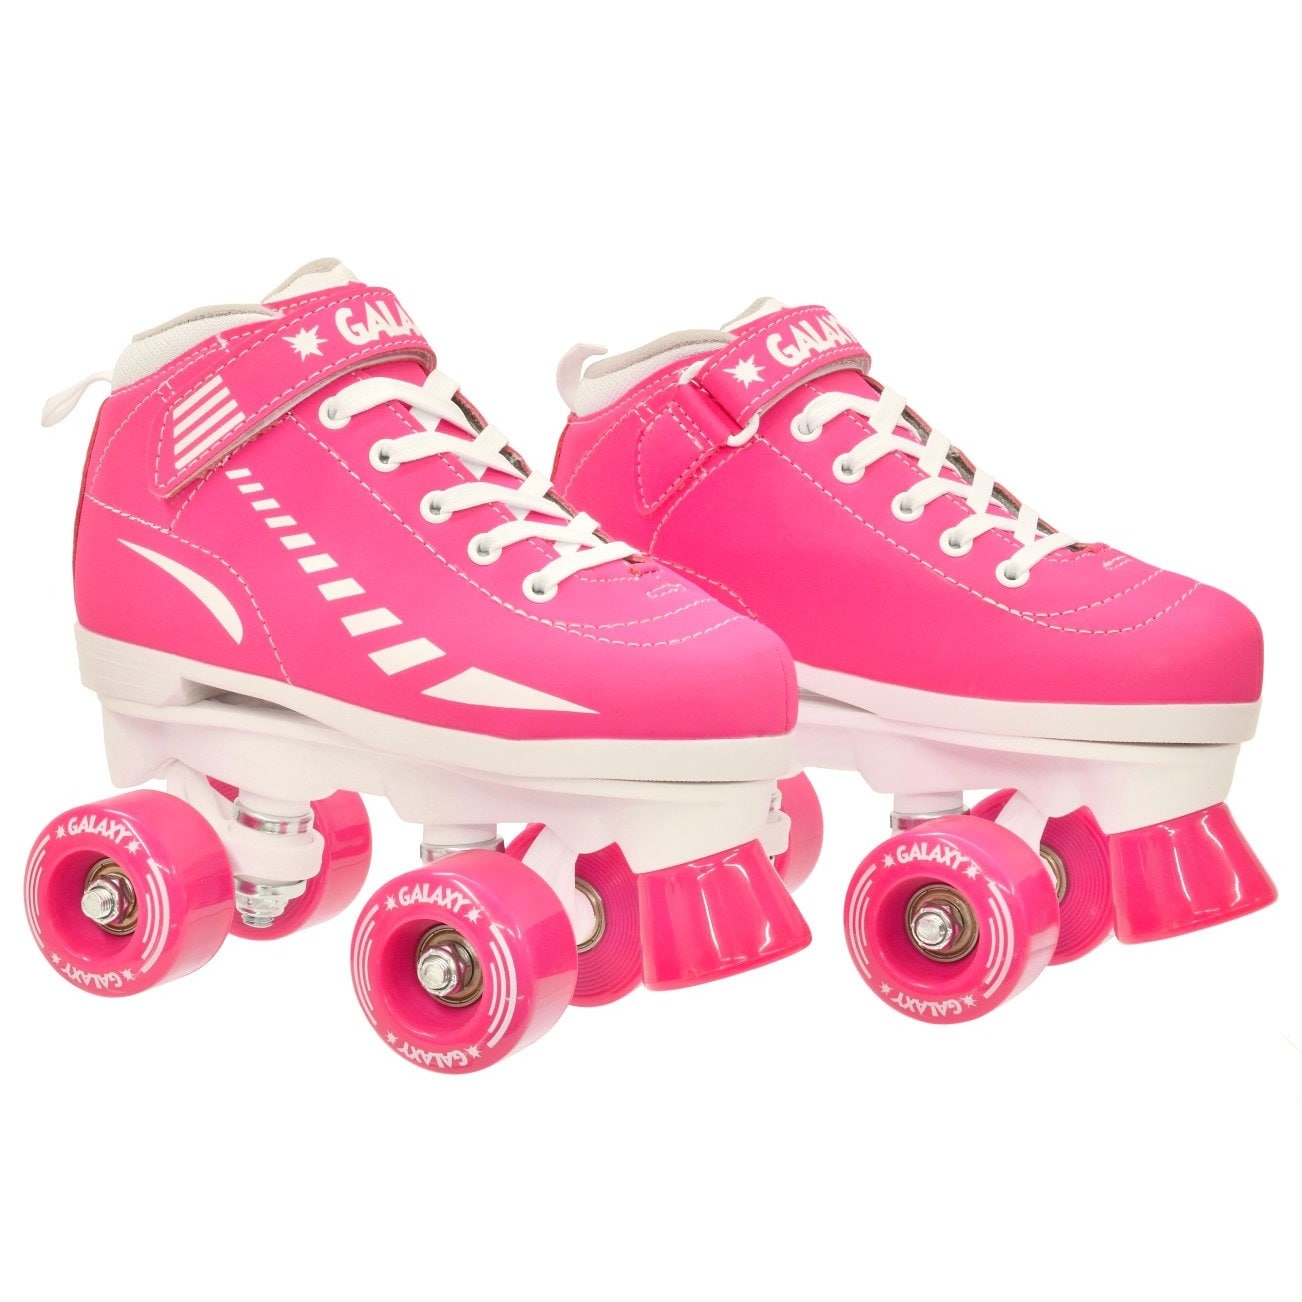 Epic Pink Galaxy Elite Quad Roller Skates - Bed Bath & Beyond